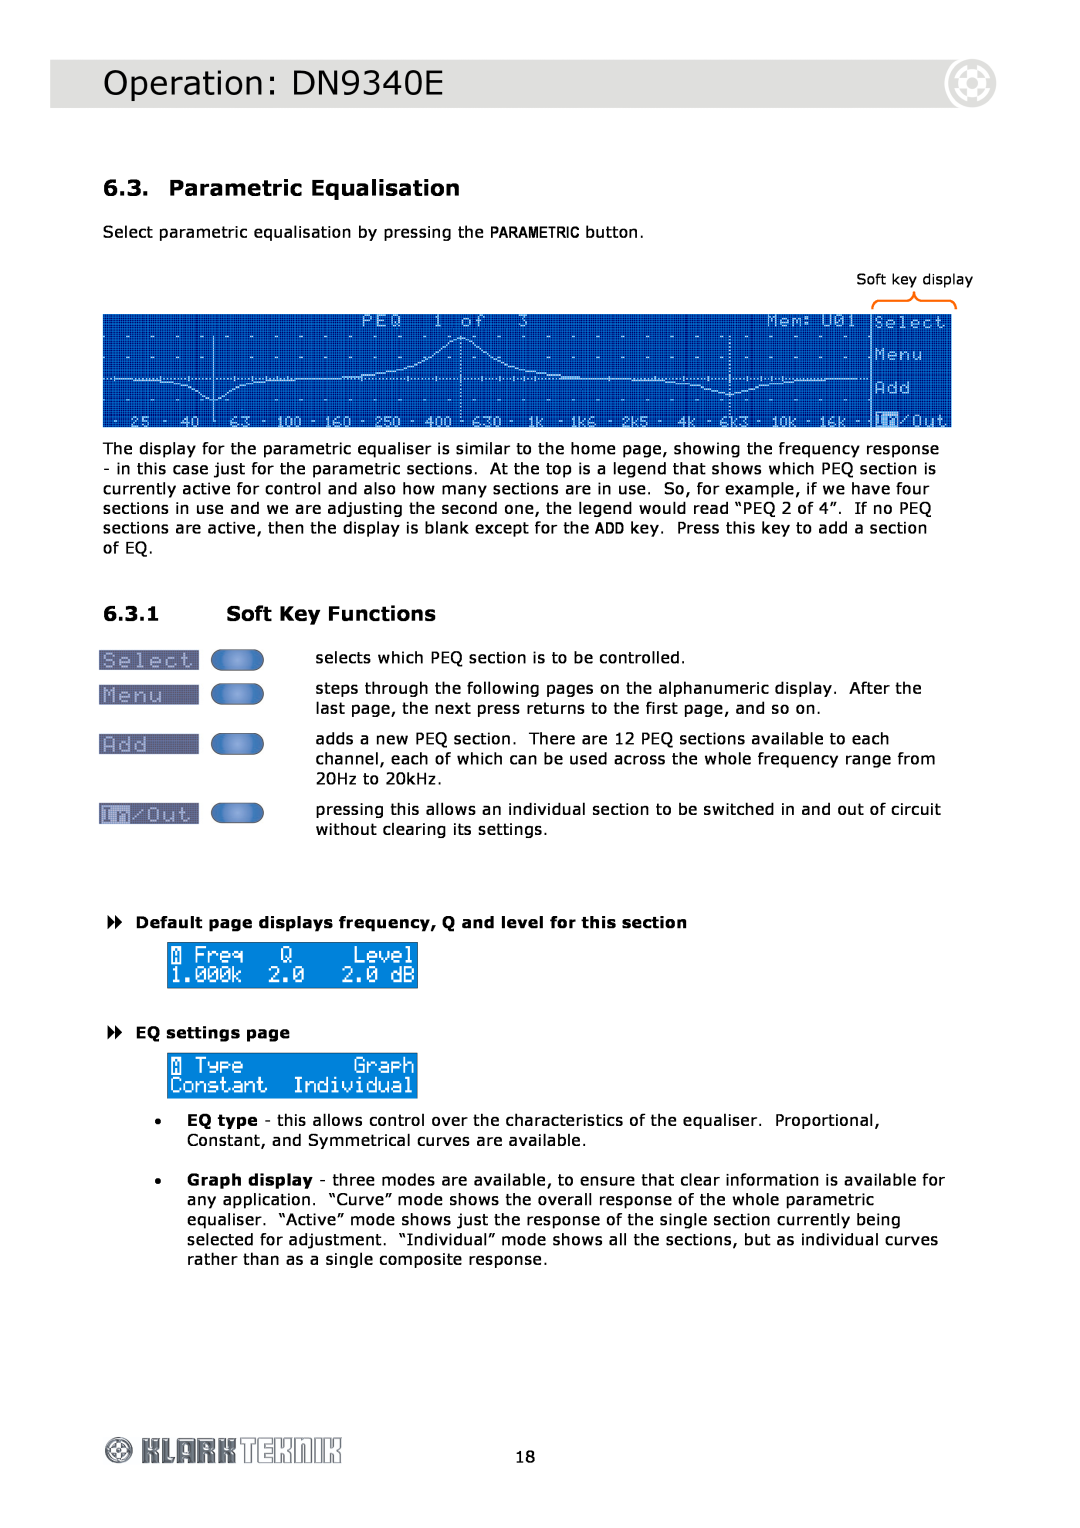 Klark Teknik DN9344E specifications Parametric Equalisation, Operation DN9340E, 6.3.1Soft Key Functions 